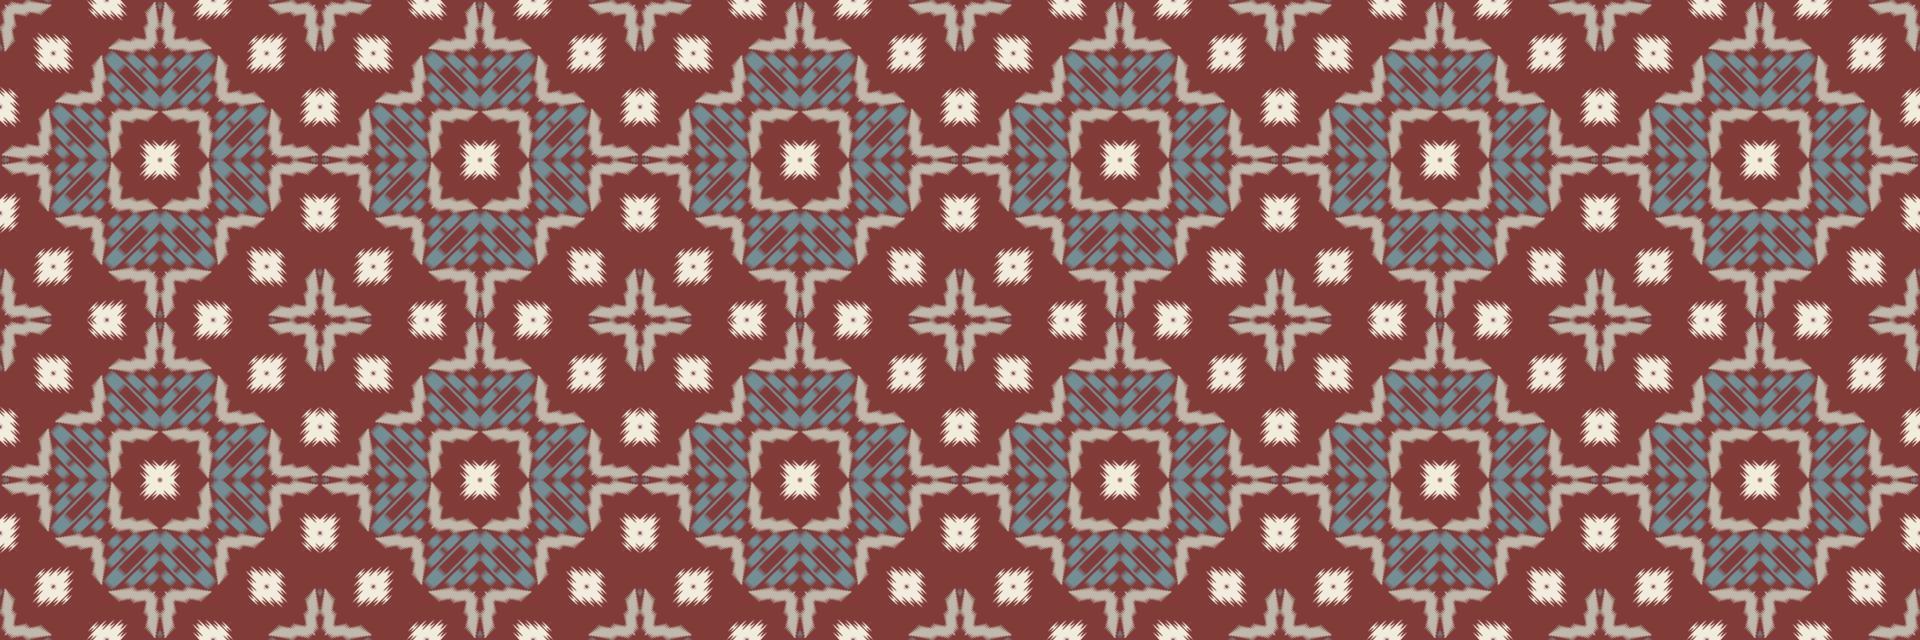 Batik Textile Ethnic ikat designs seamless pattern digital vector design for Print saree Kurti Borneo Fabric border brush symbols swatches stylish